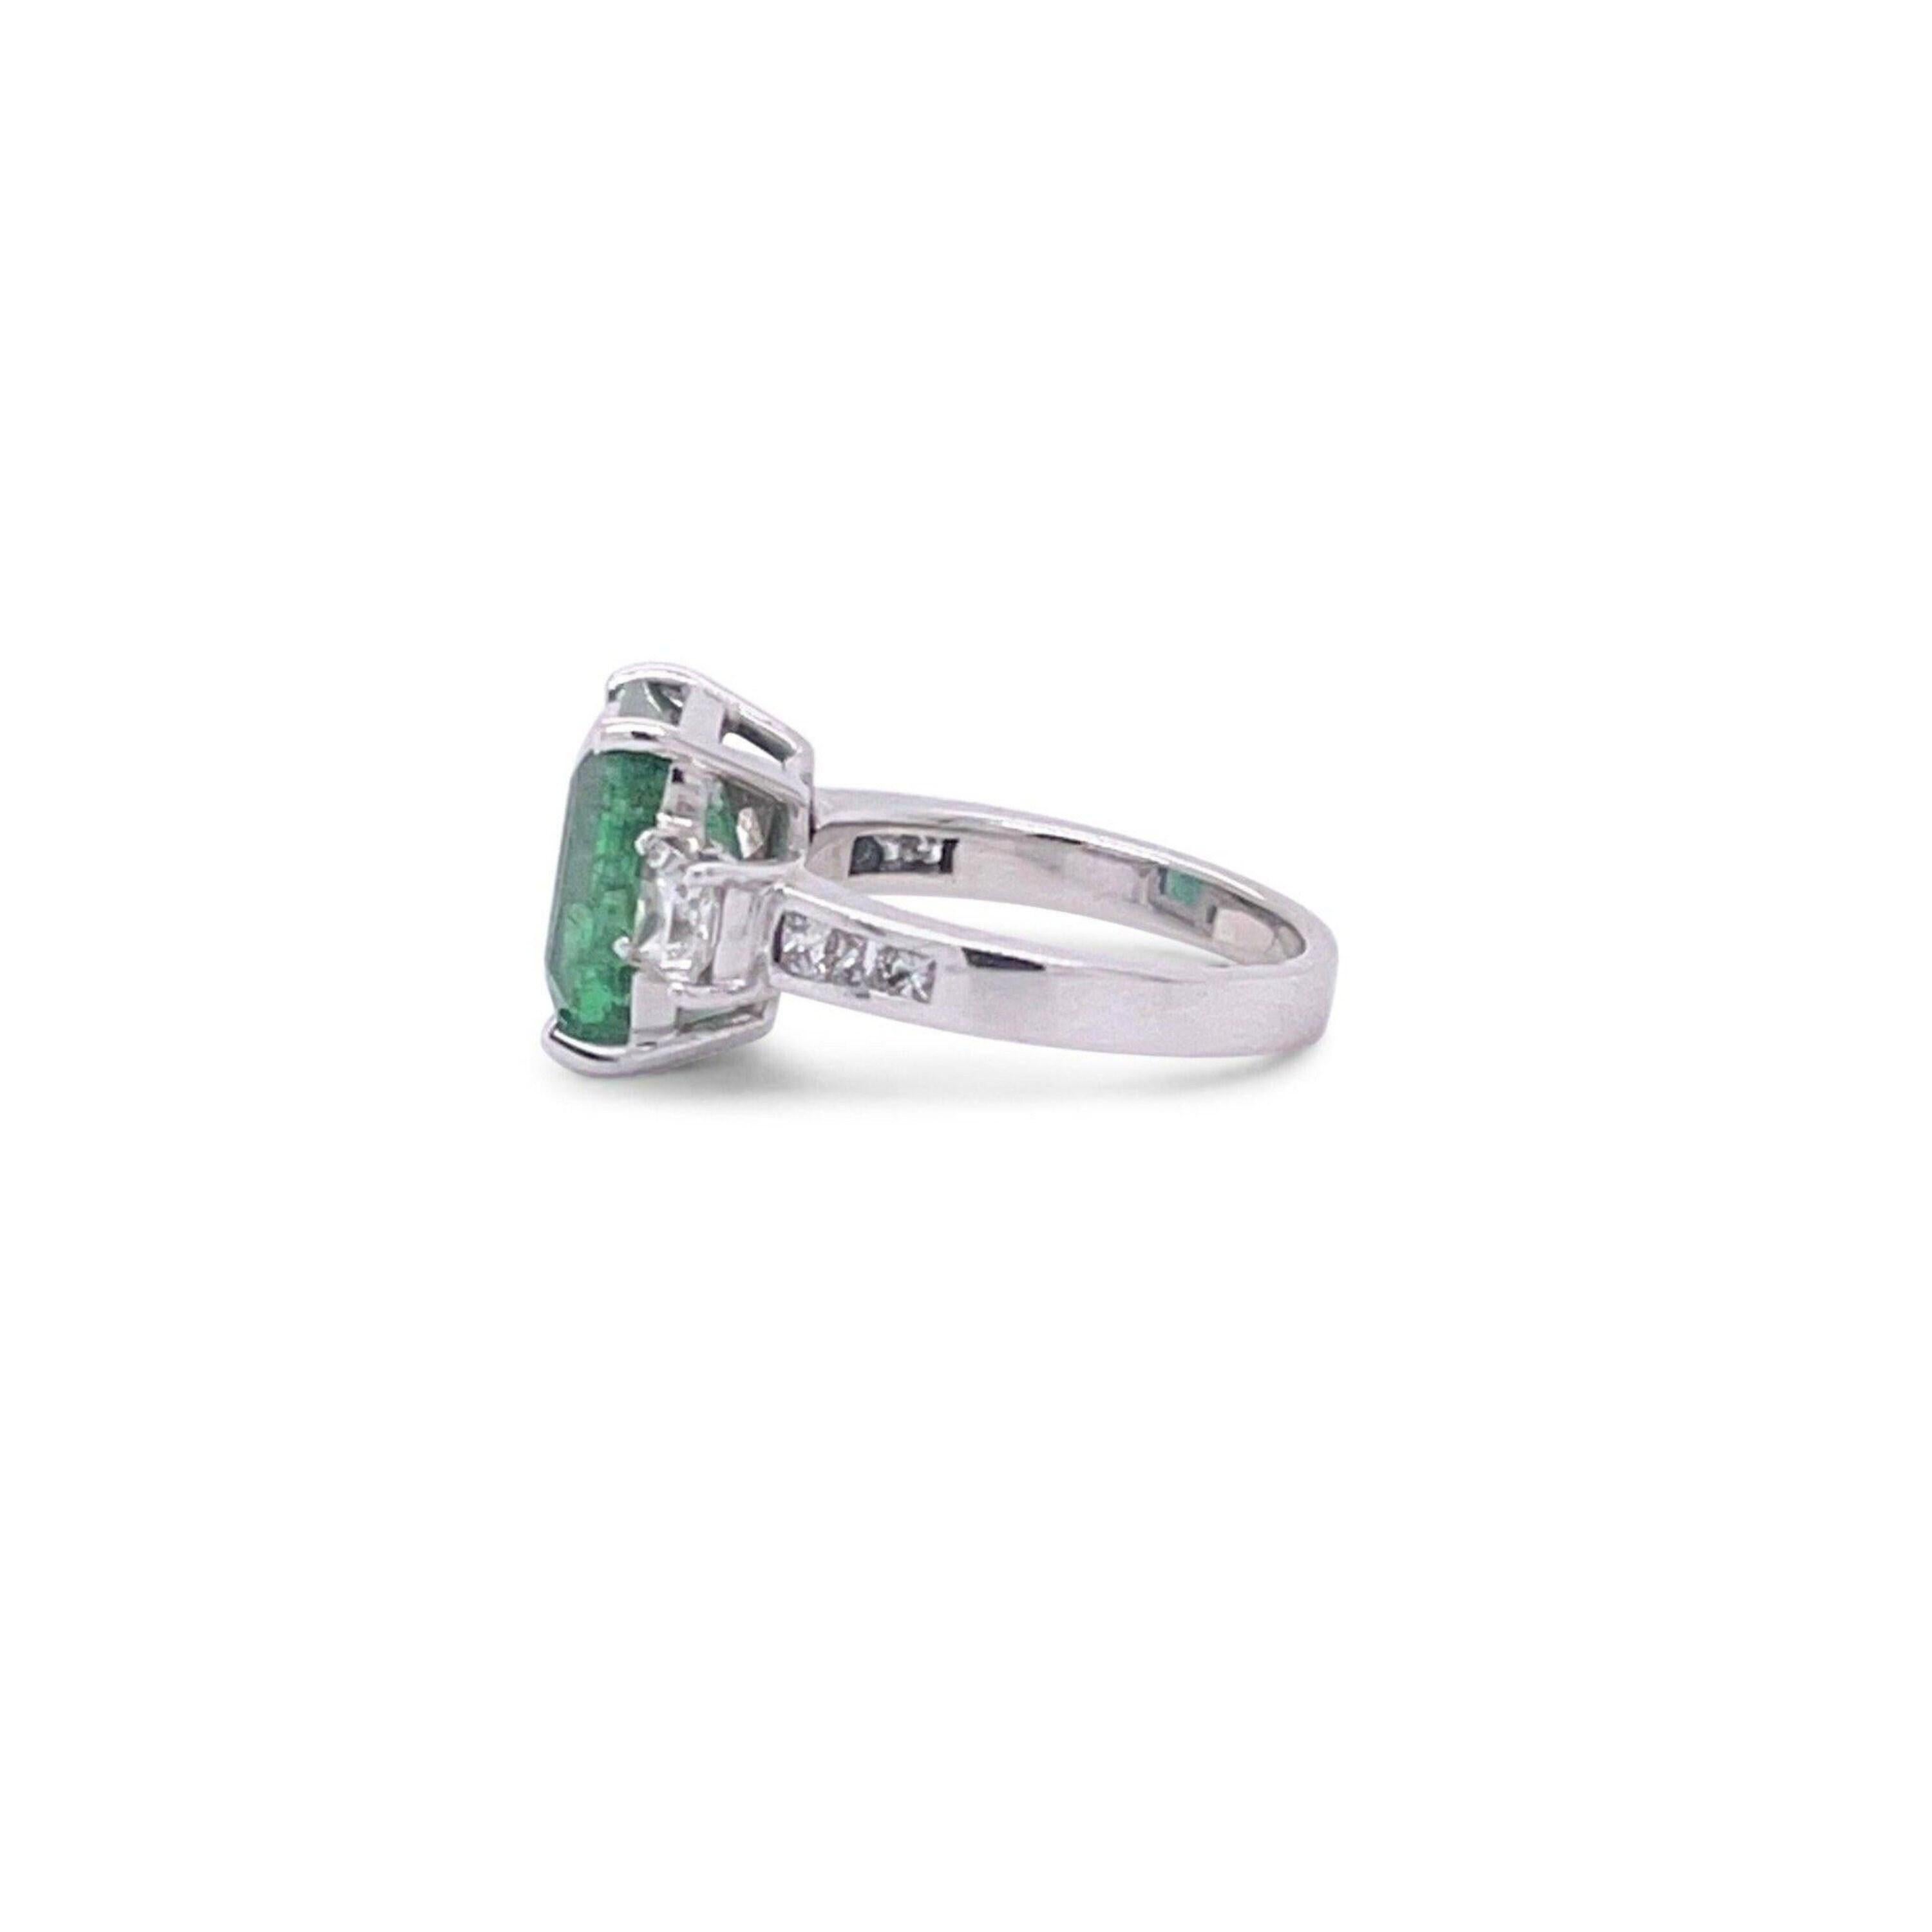 For Sale:  4 Carat Emerald Cut Emerald Diamond Engagement Ring, Halo Diamond 18K Gold Ring 5